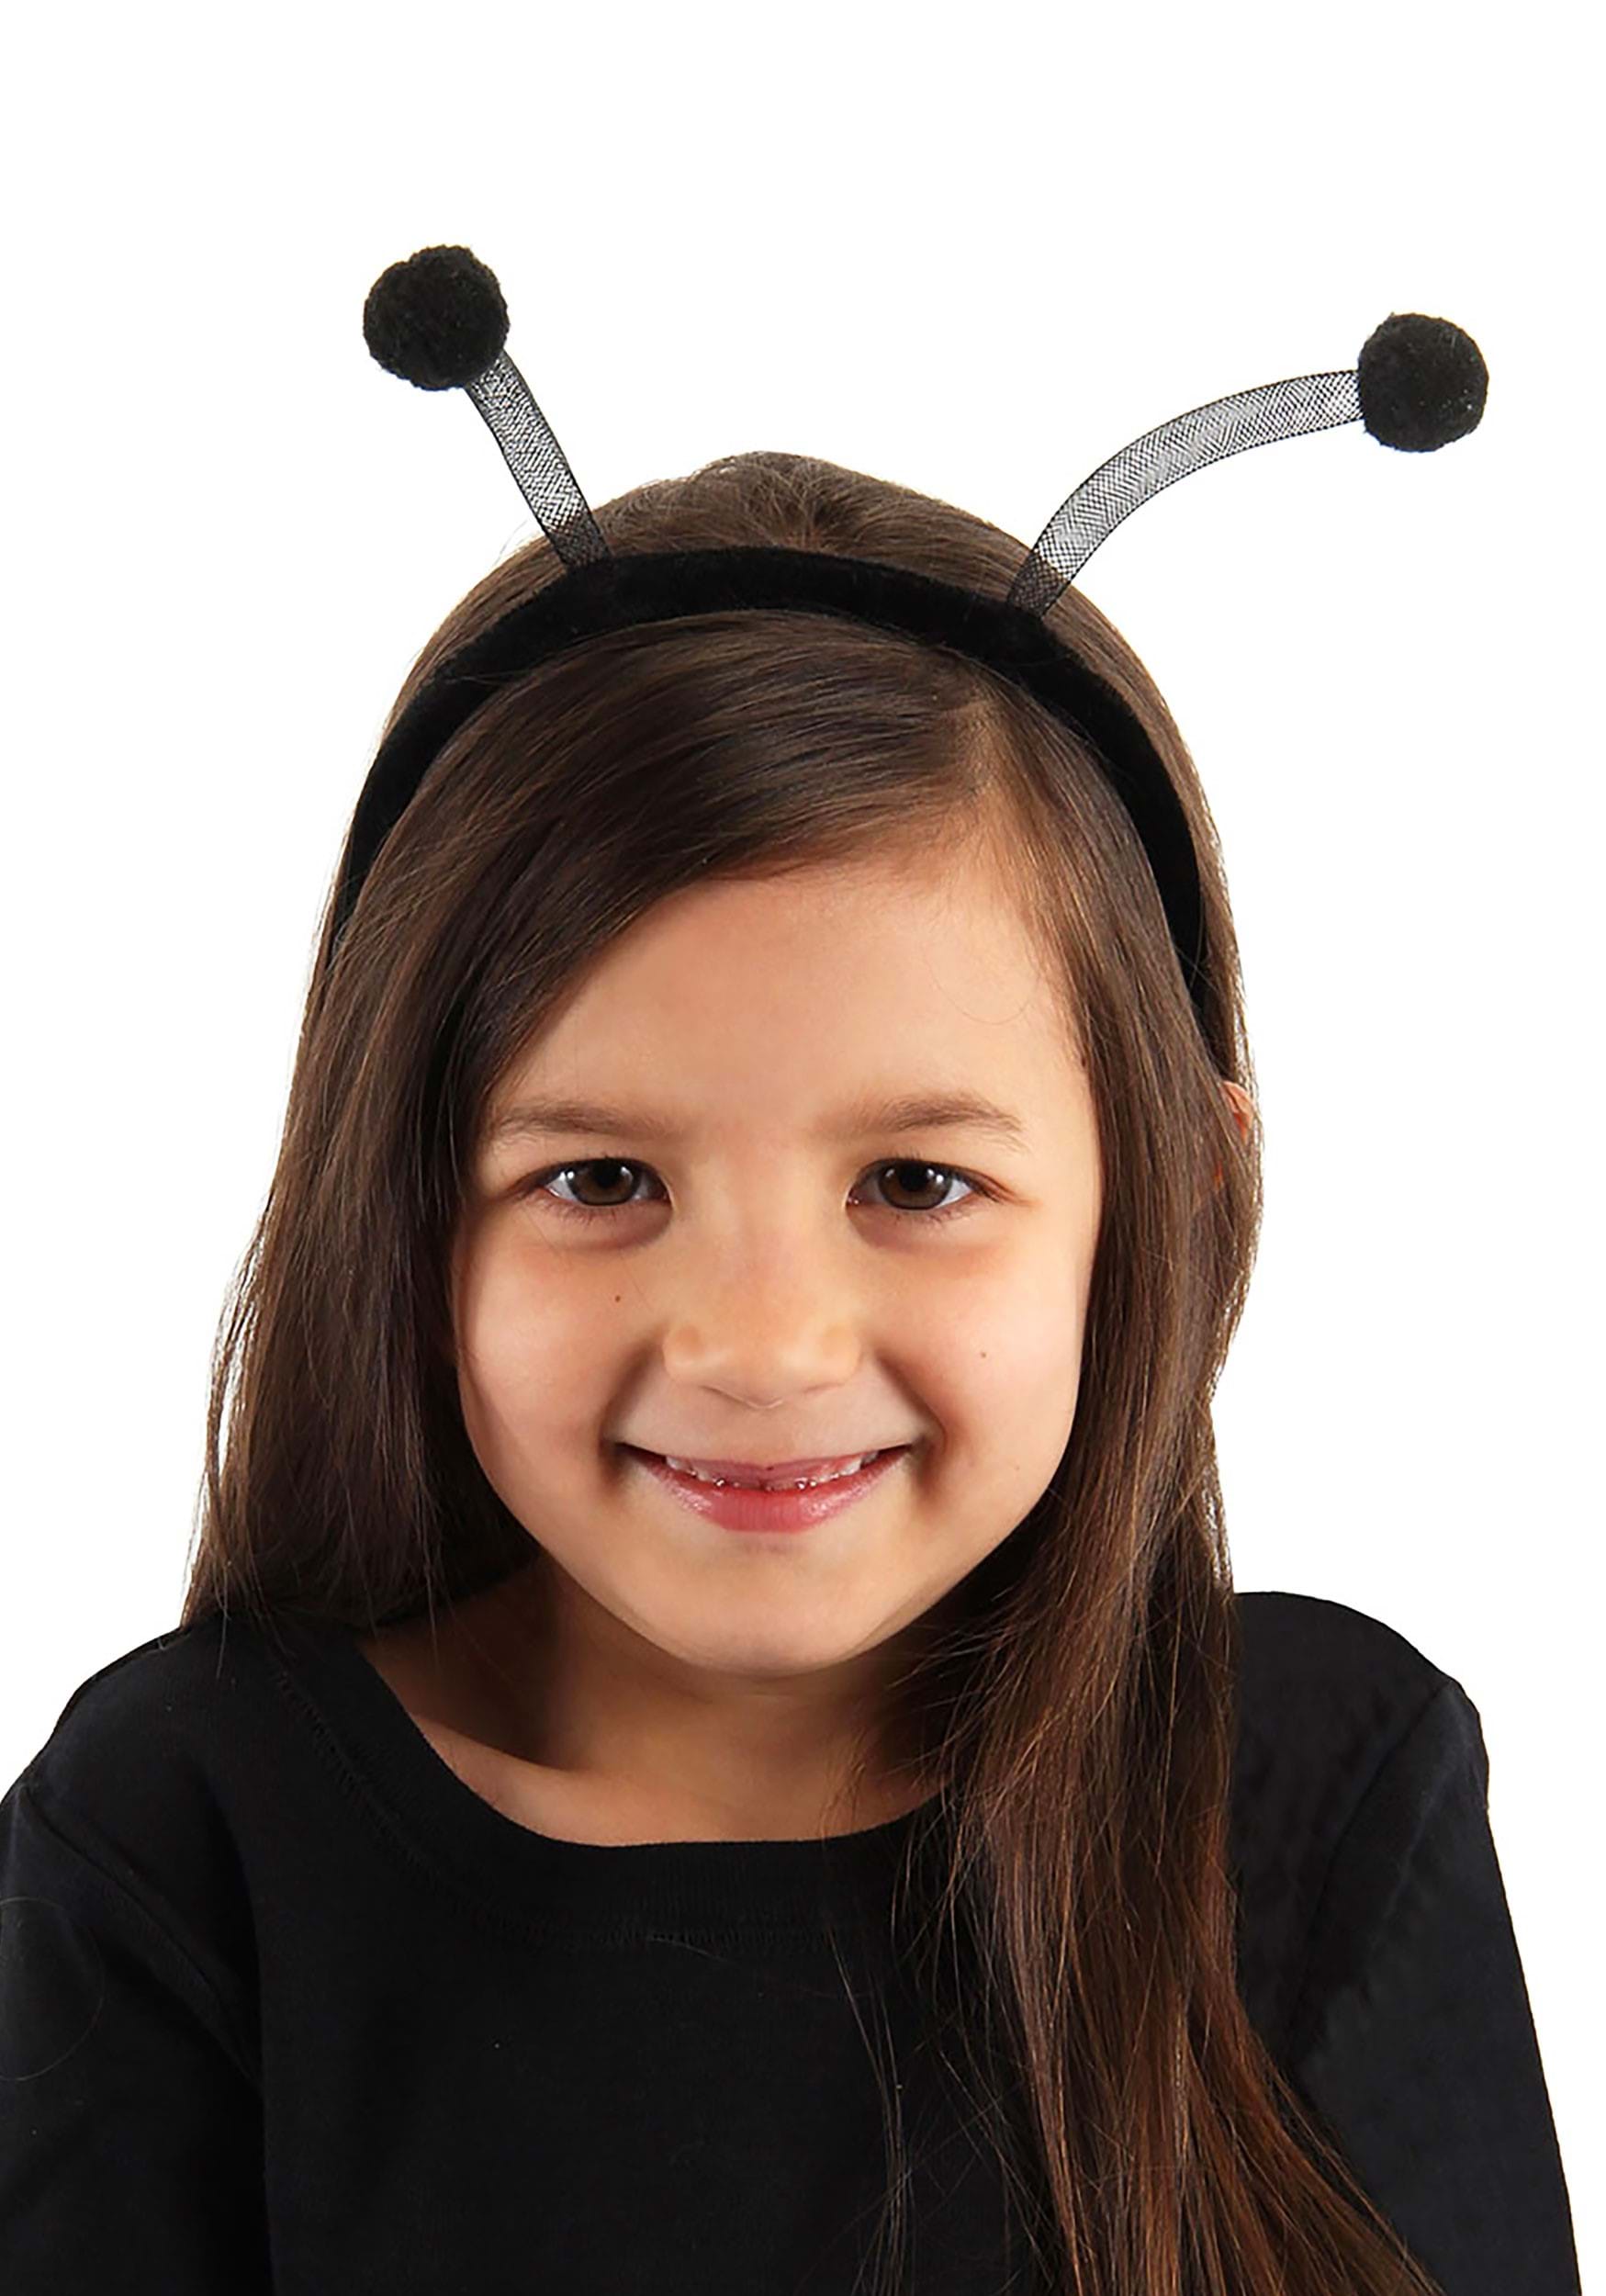 Black Bug Antennae Headband Costume Accessory